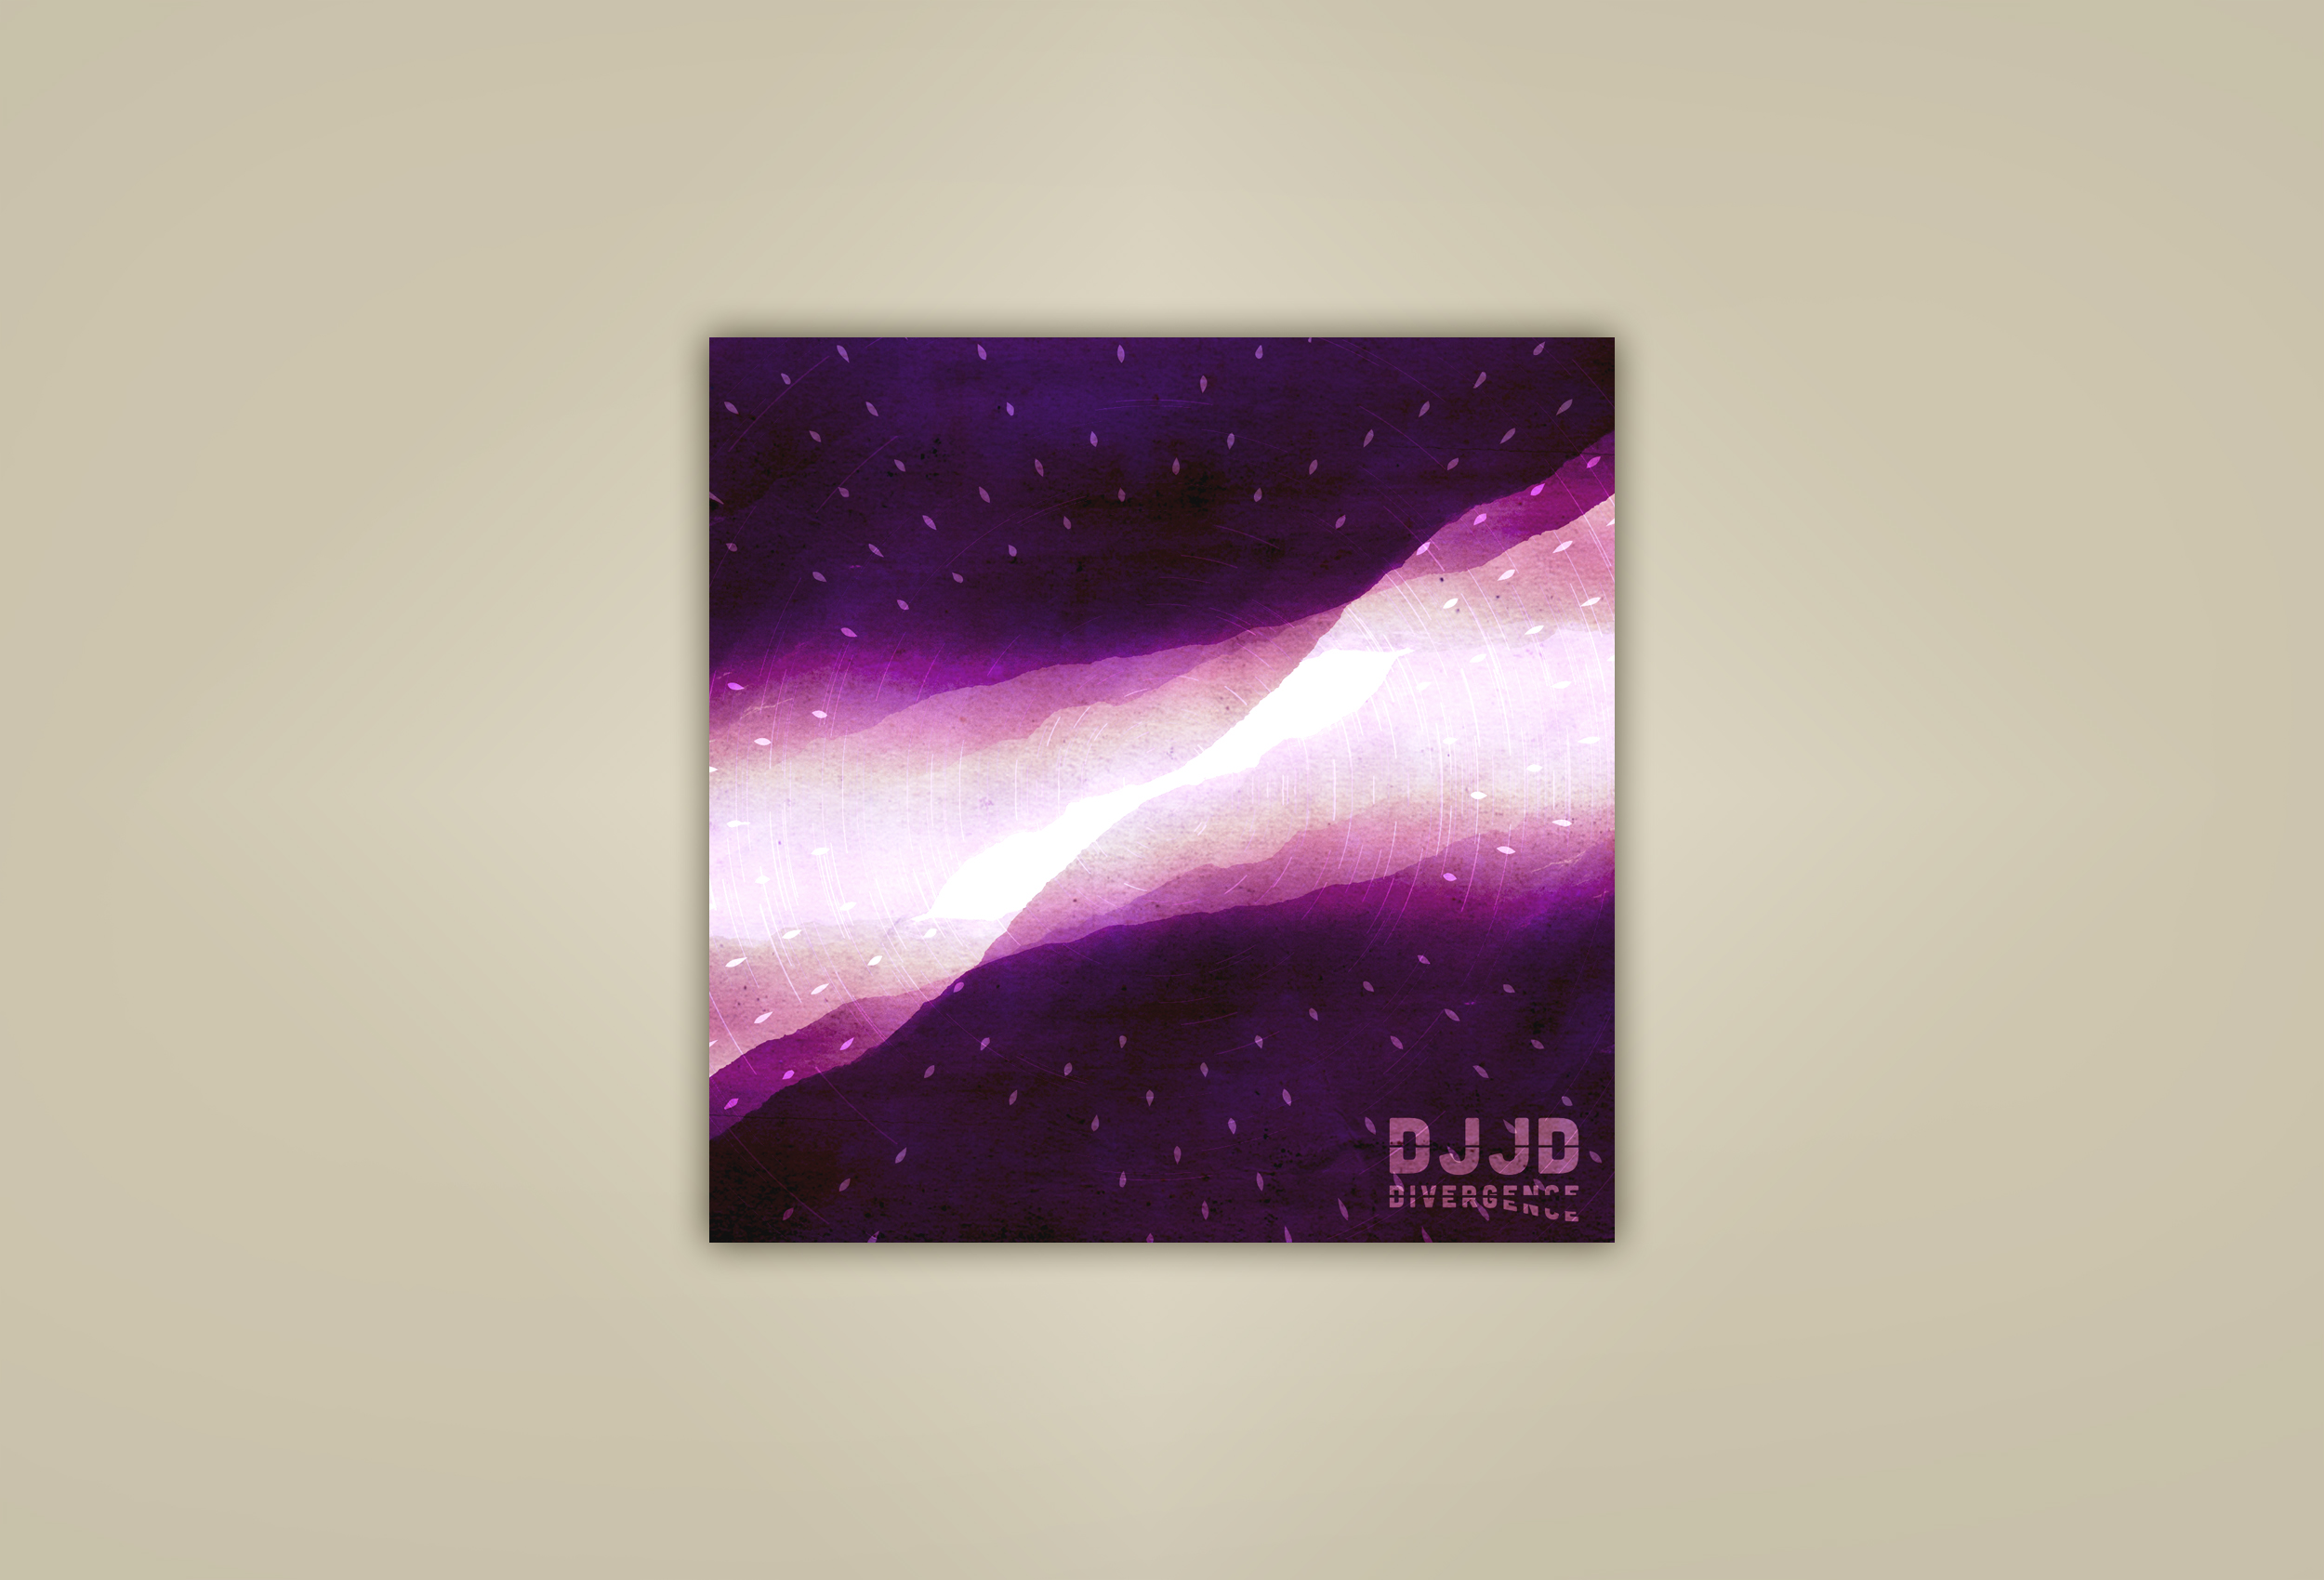 DjjD - Divergence album artwork design.